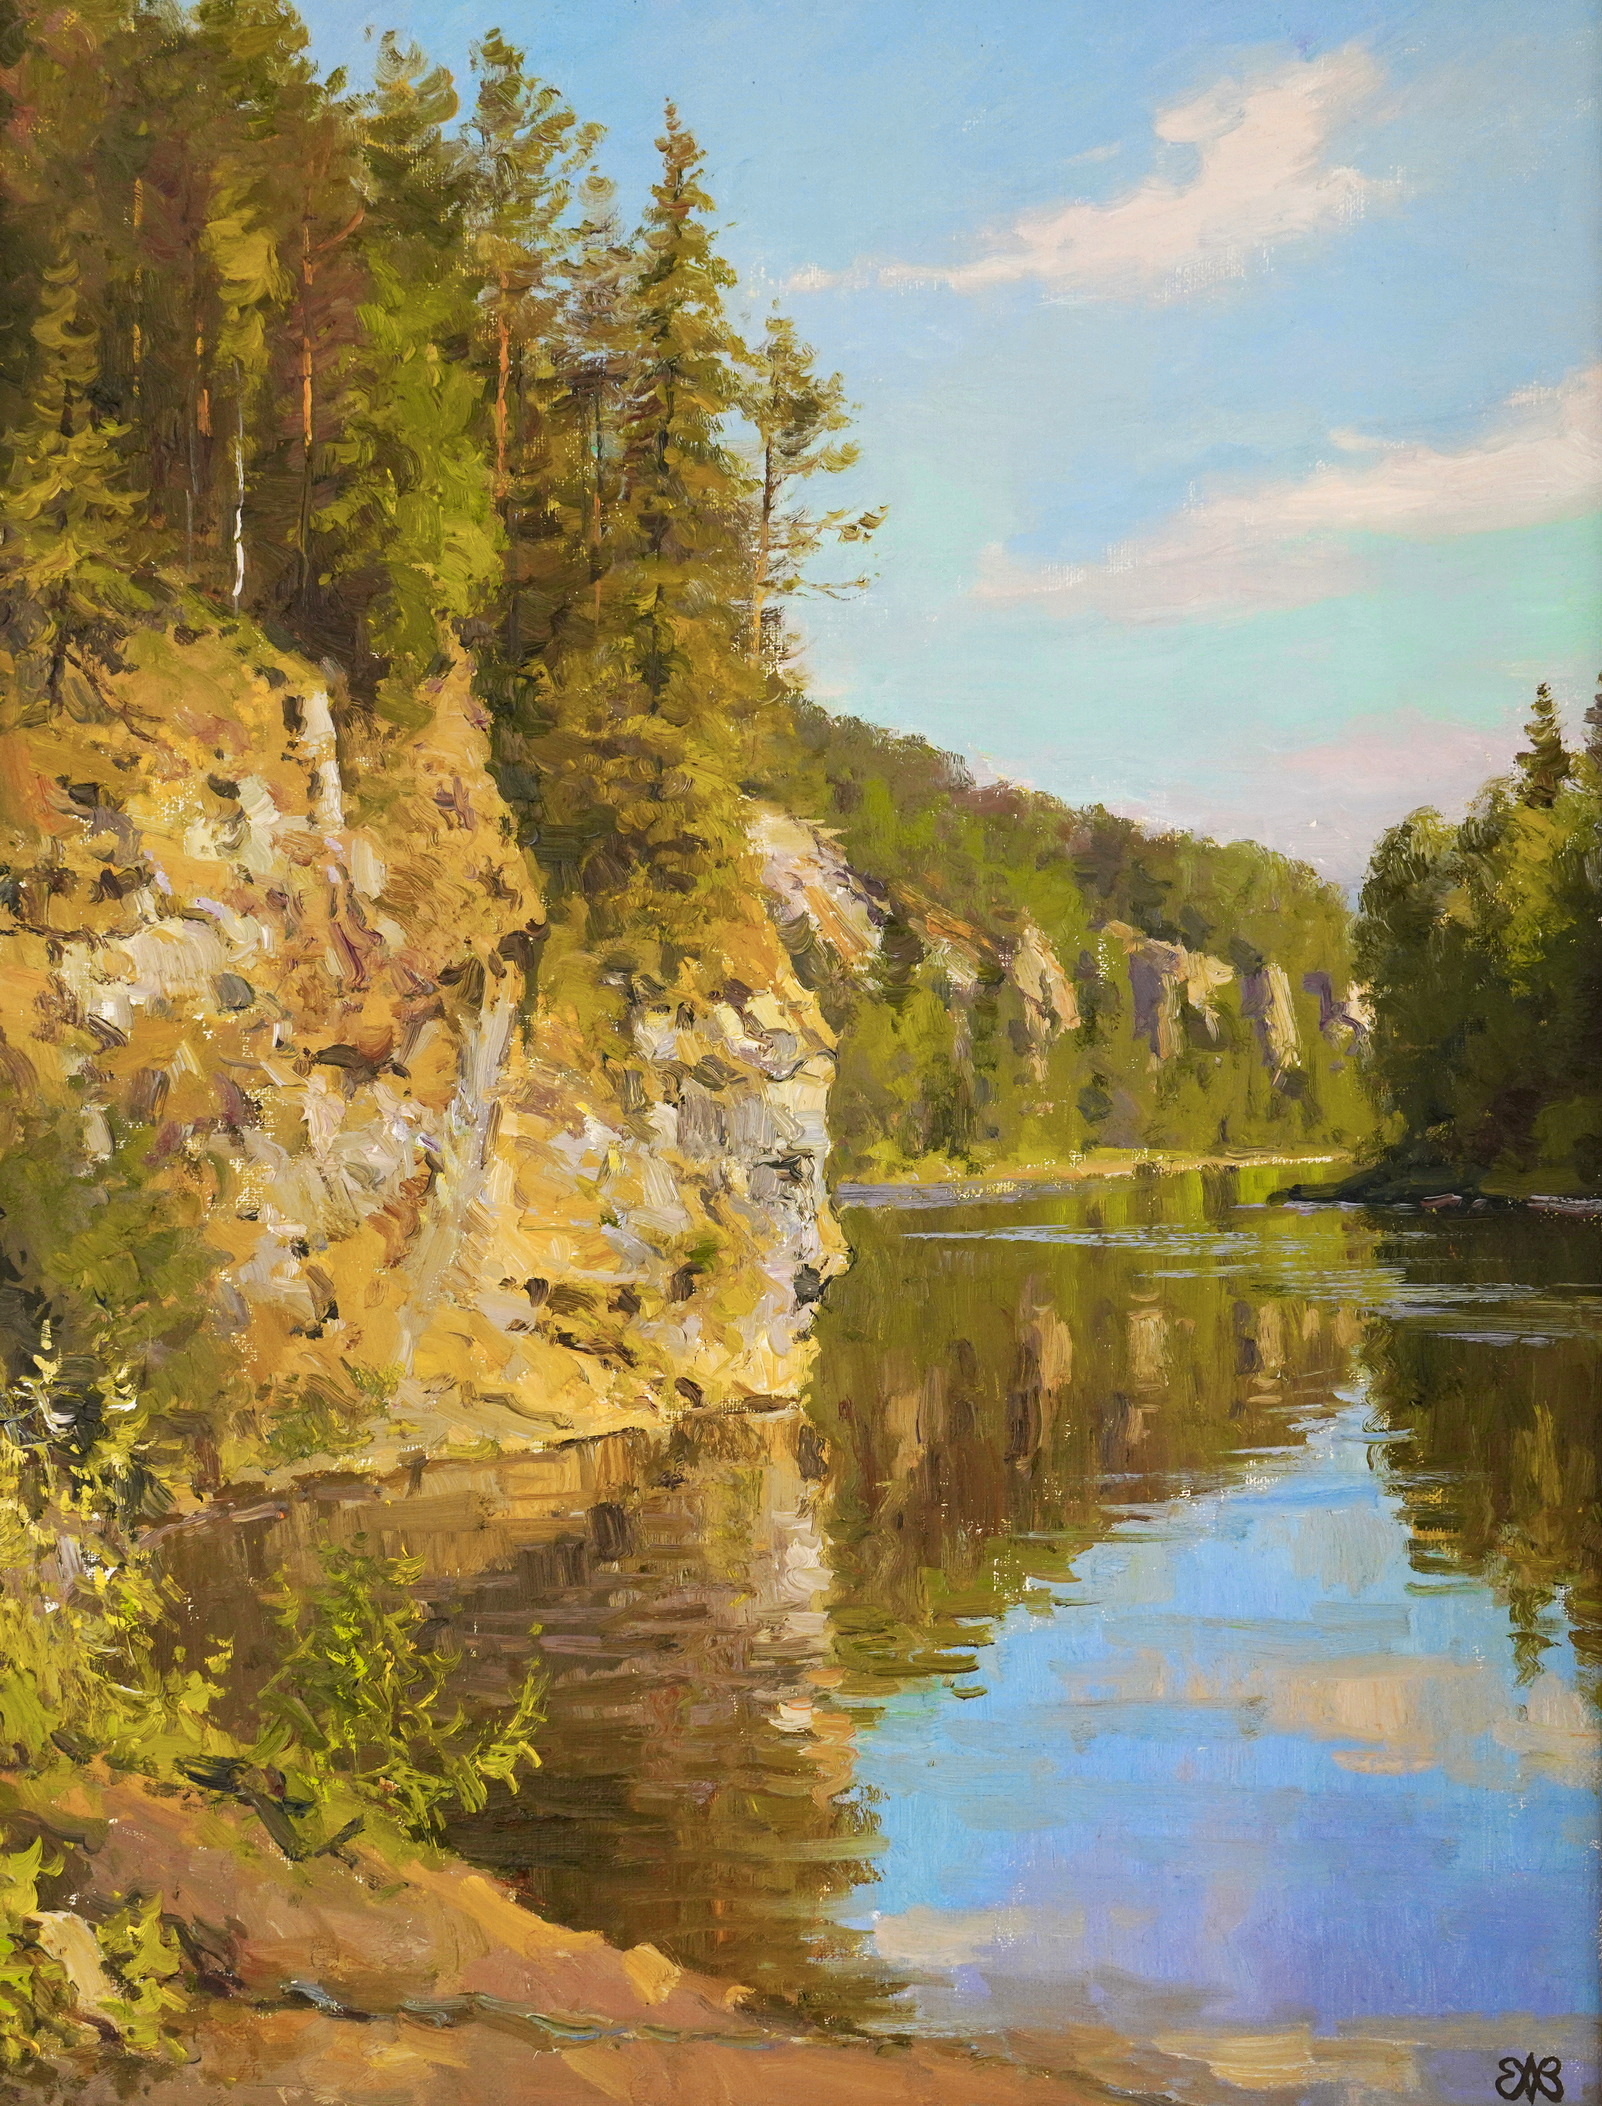 The Chusovaya River - 1, Alexey Efremov, Buy the painting Oil